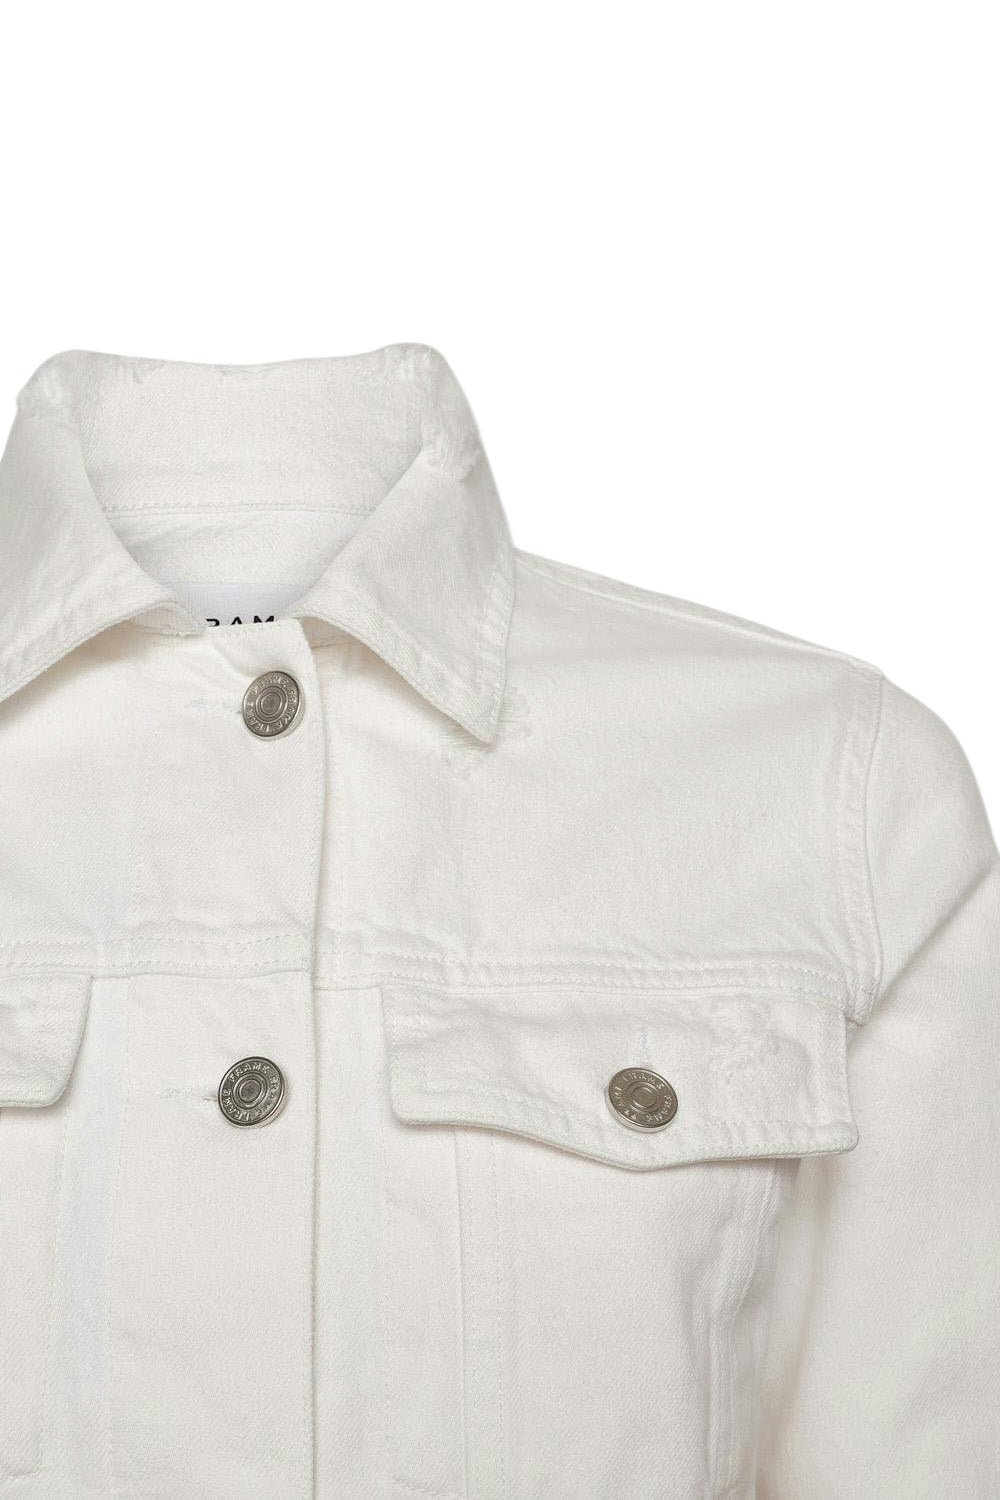 Frame Denim Le Vintage Jacket in White Rips